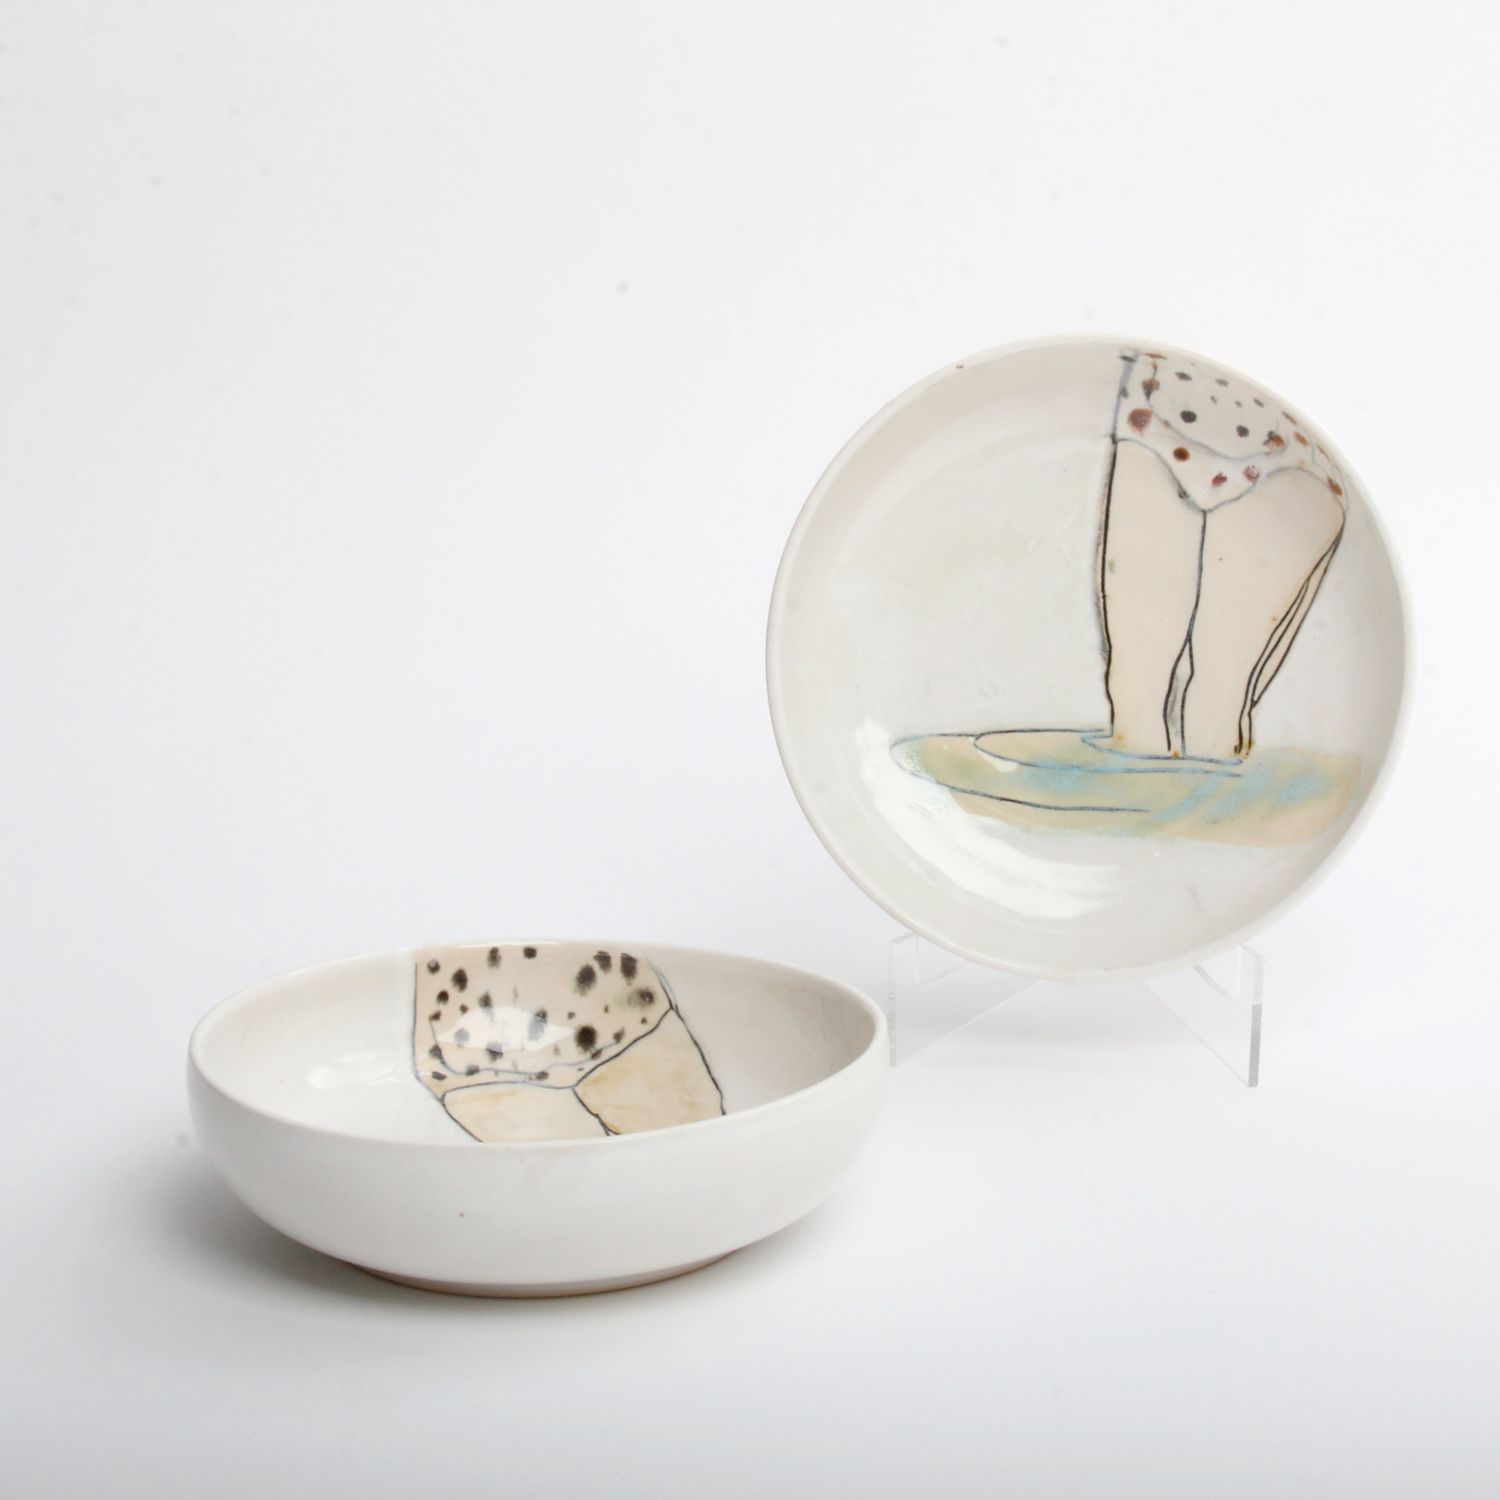 Lindsay Gravelle: Swimmer bowls Product Image 1 of 5